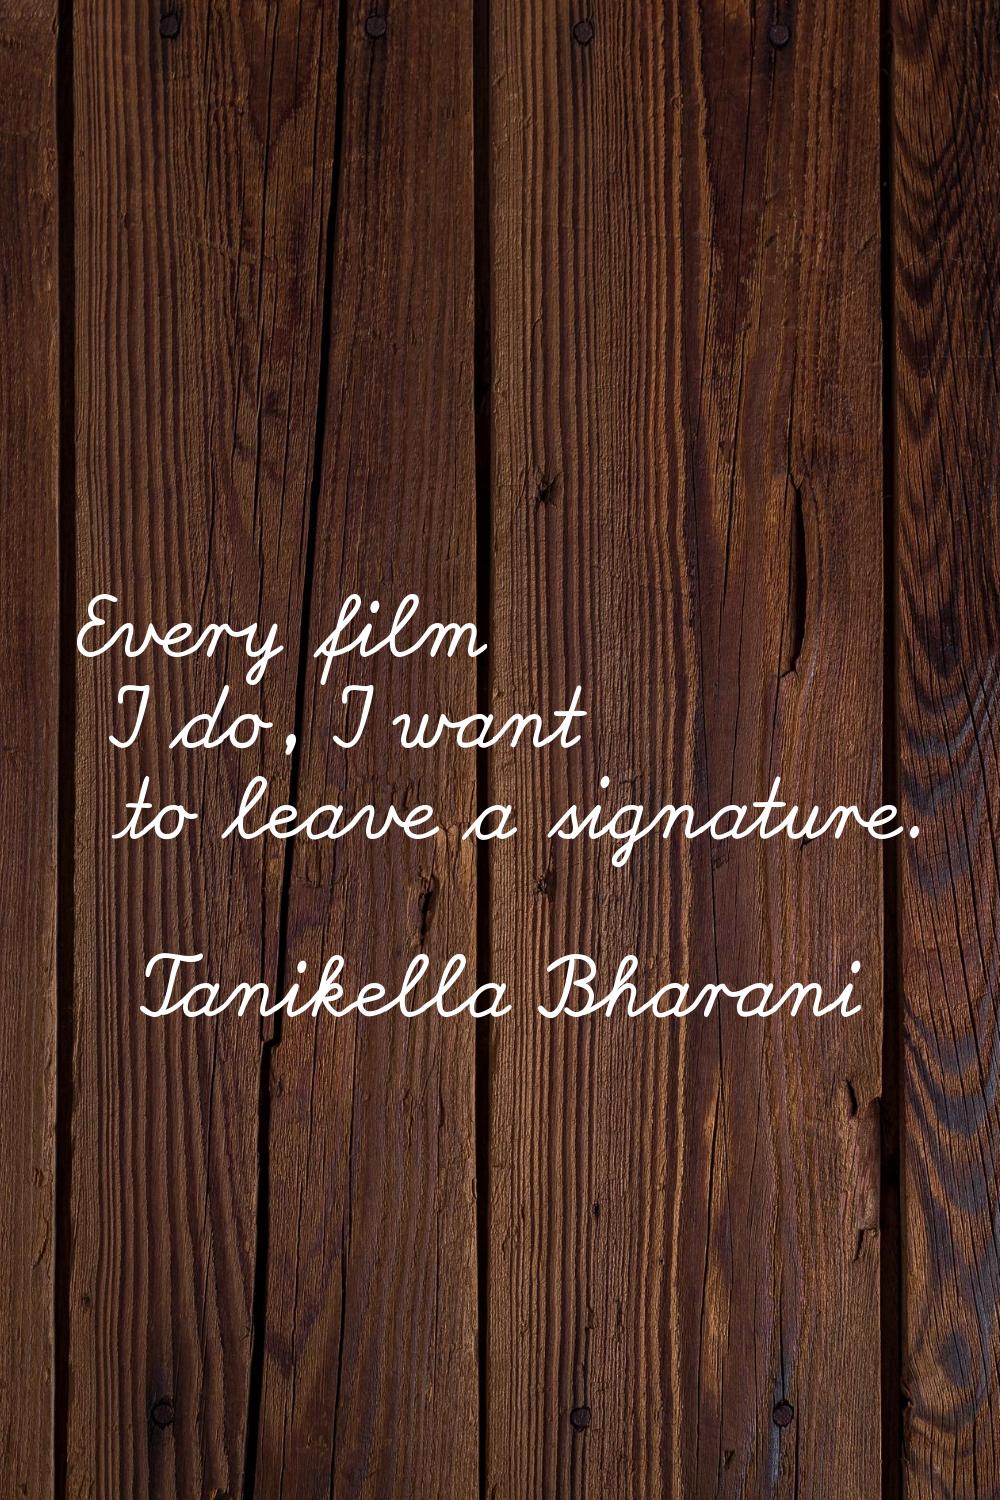 Every film I do, I want to leave a signature.